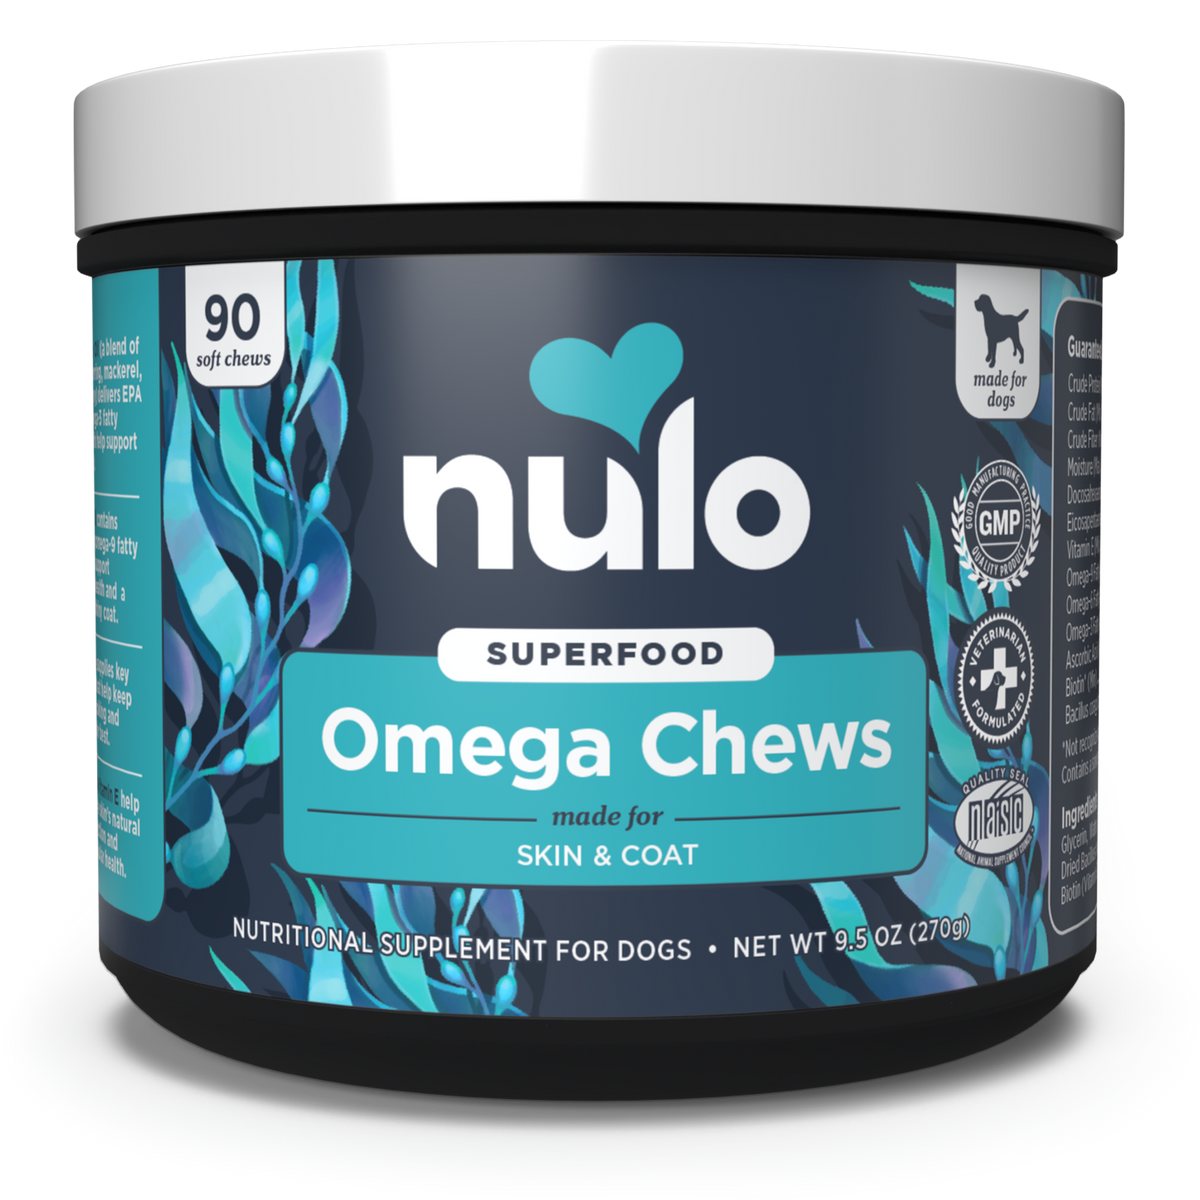 Nulo Super Food Omega Chews 90 count - Dog